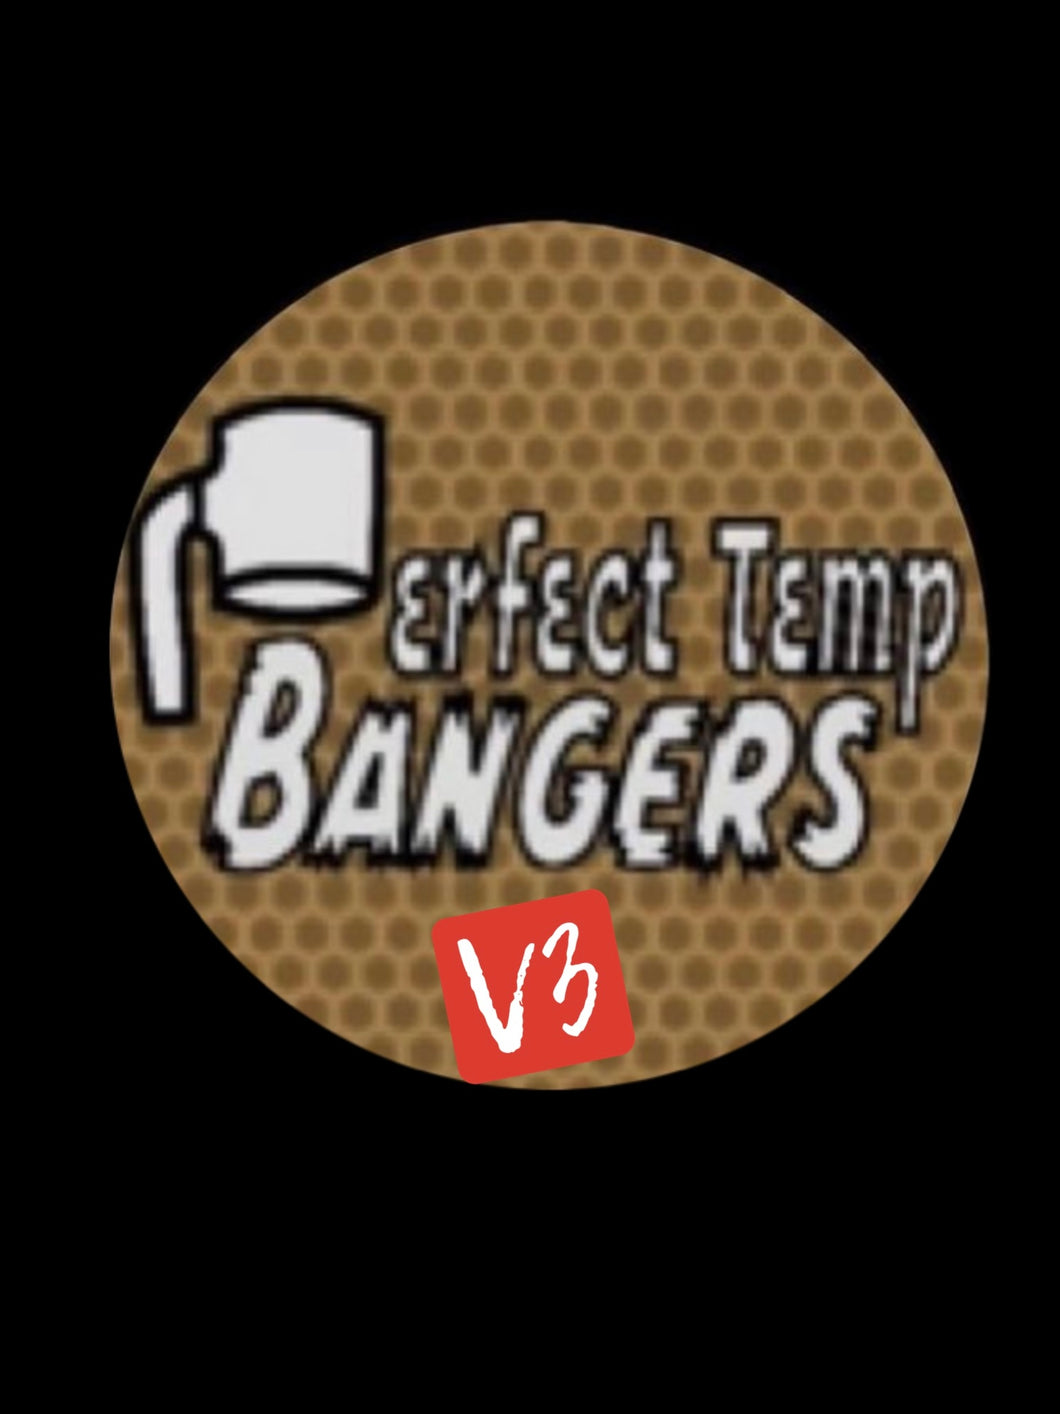 Perfect Temp Bangers V3